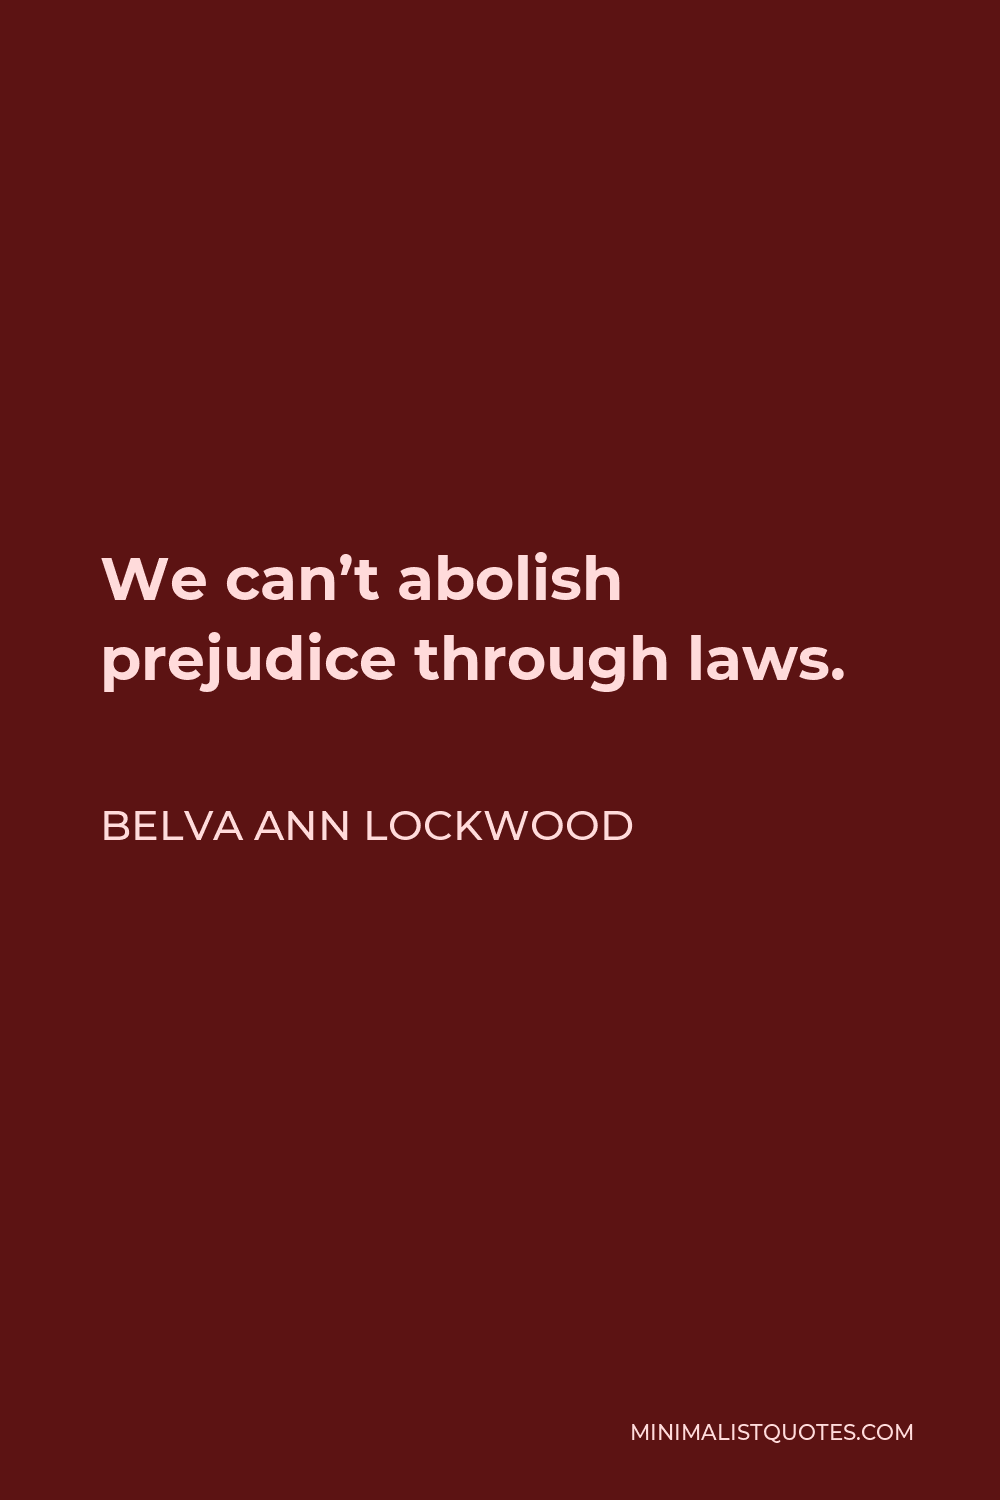 Belva Ann Lockwood Quote - We can’t abolish prejudice through laws.